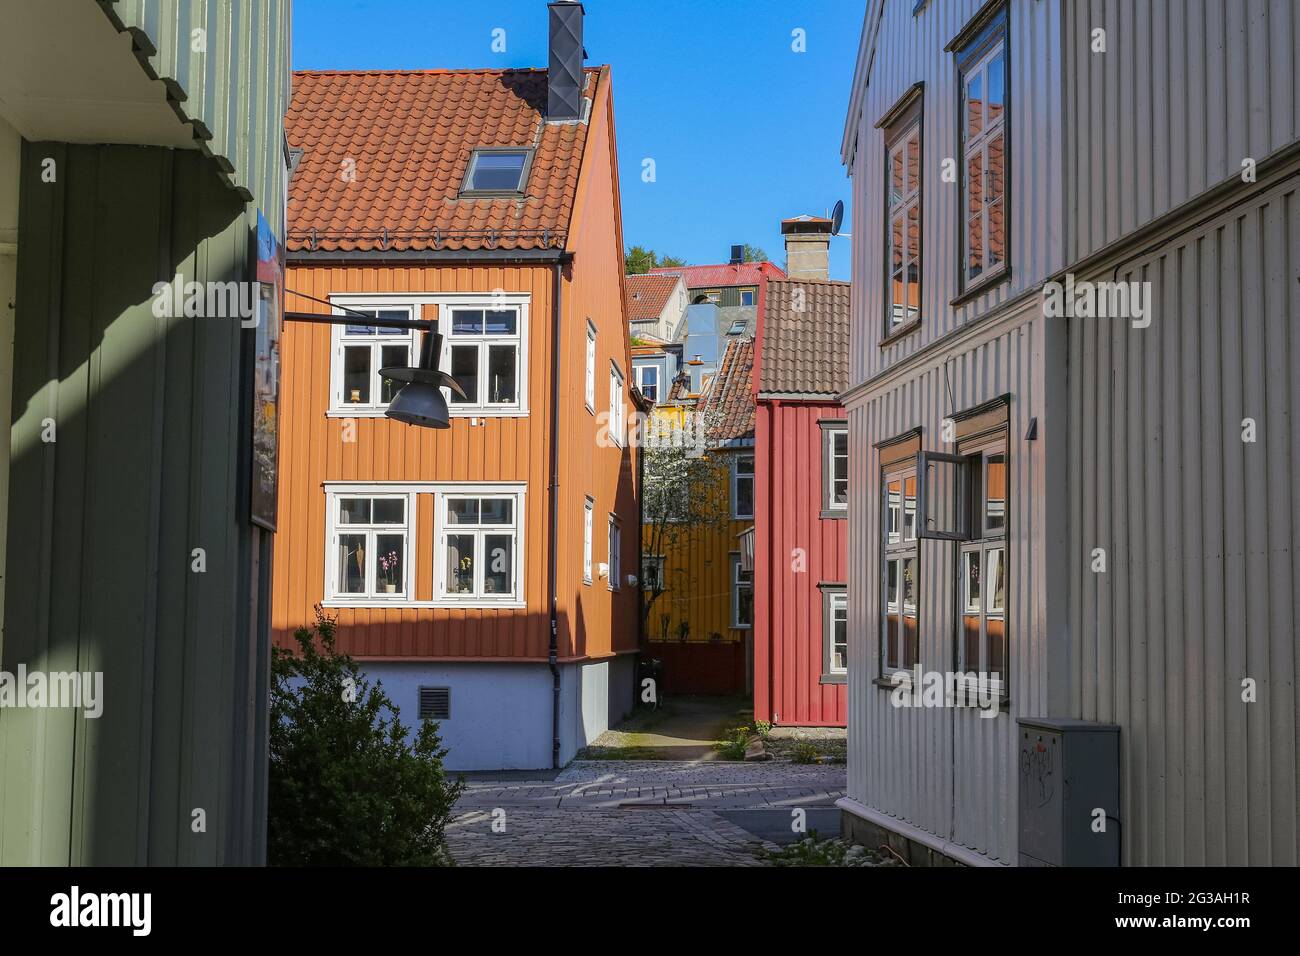 The street in Bakklandet, popular touristic district in Norwegian city Trondheim Stock Photo